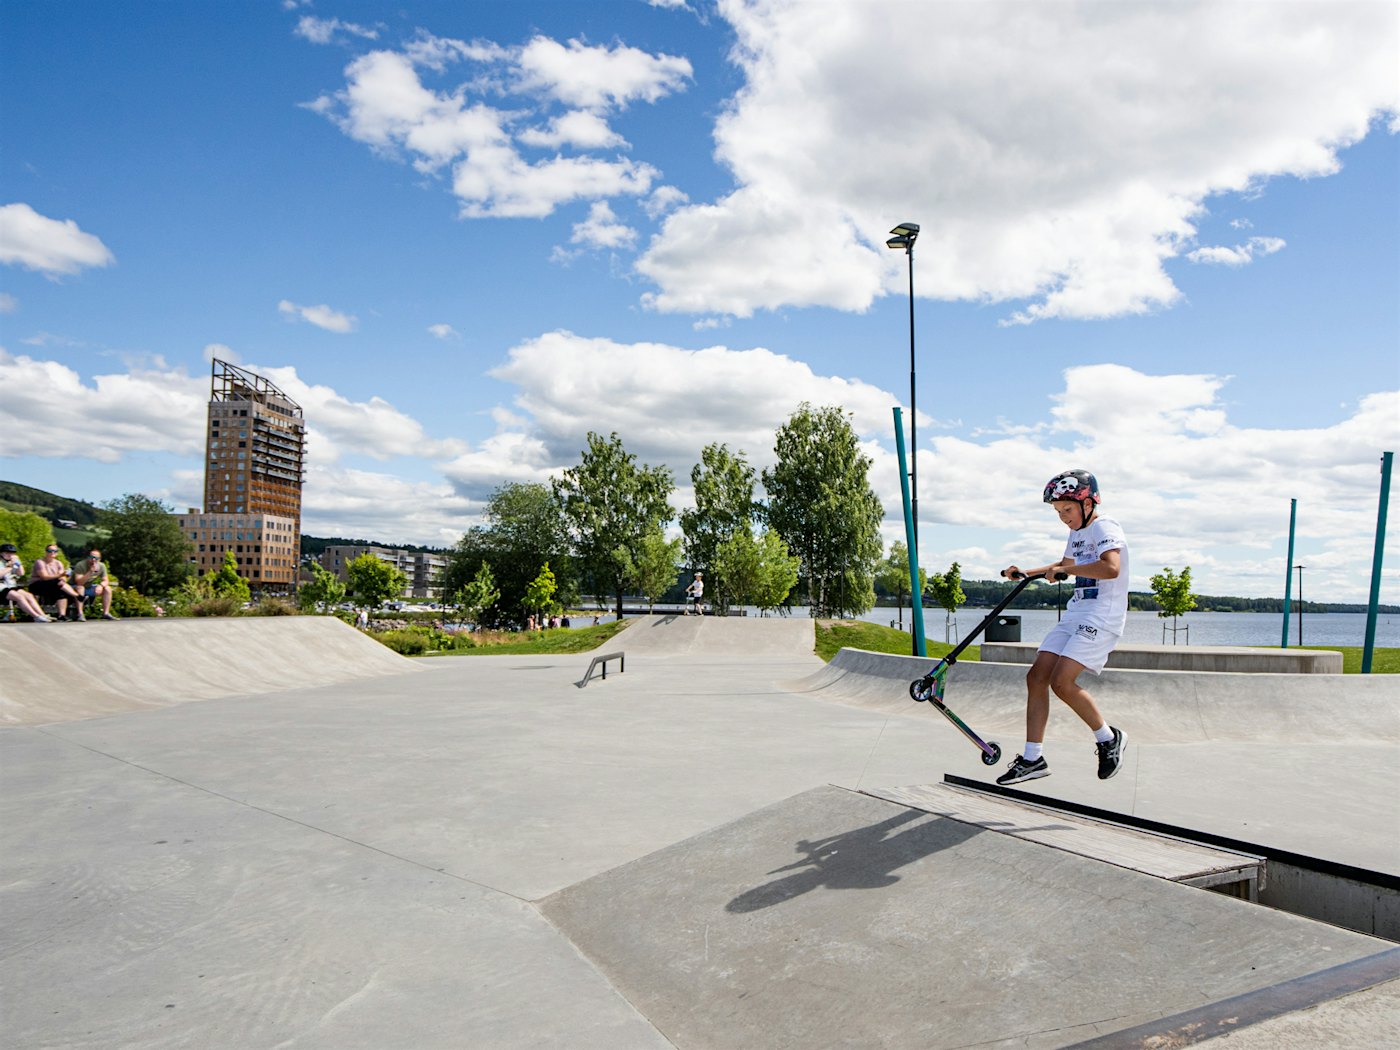 Boy on scooter in skatepark. Photo